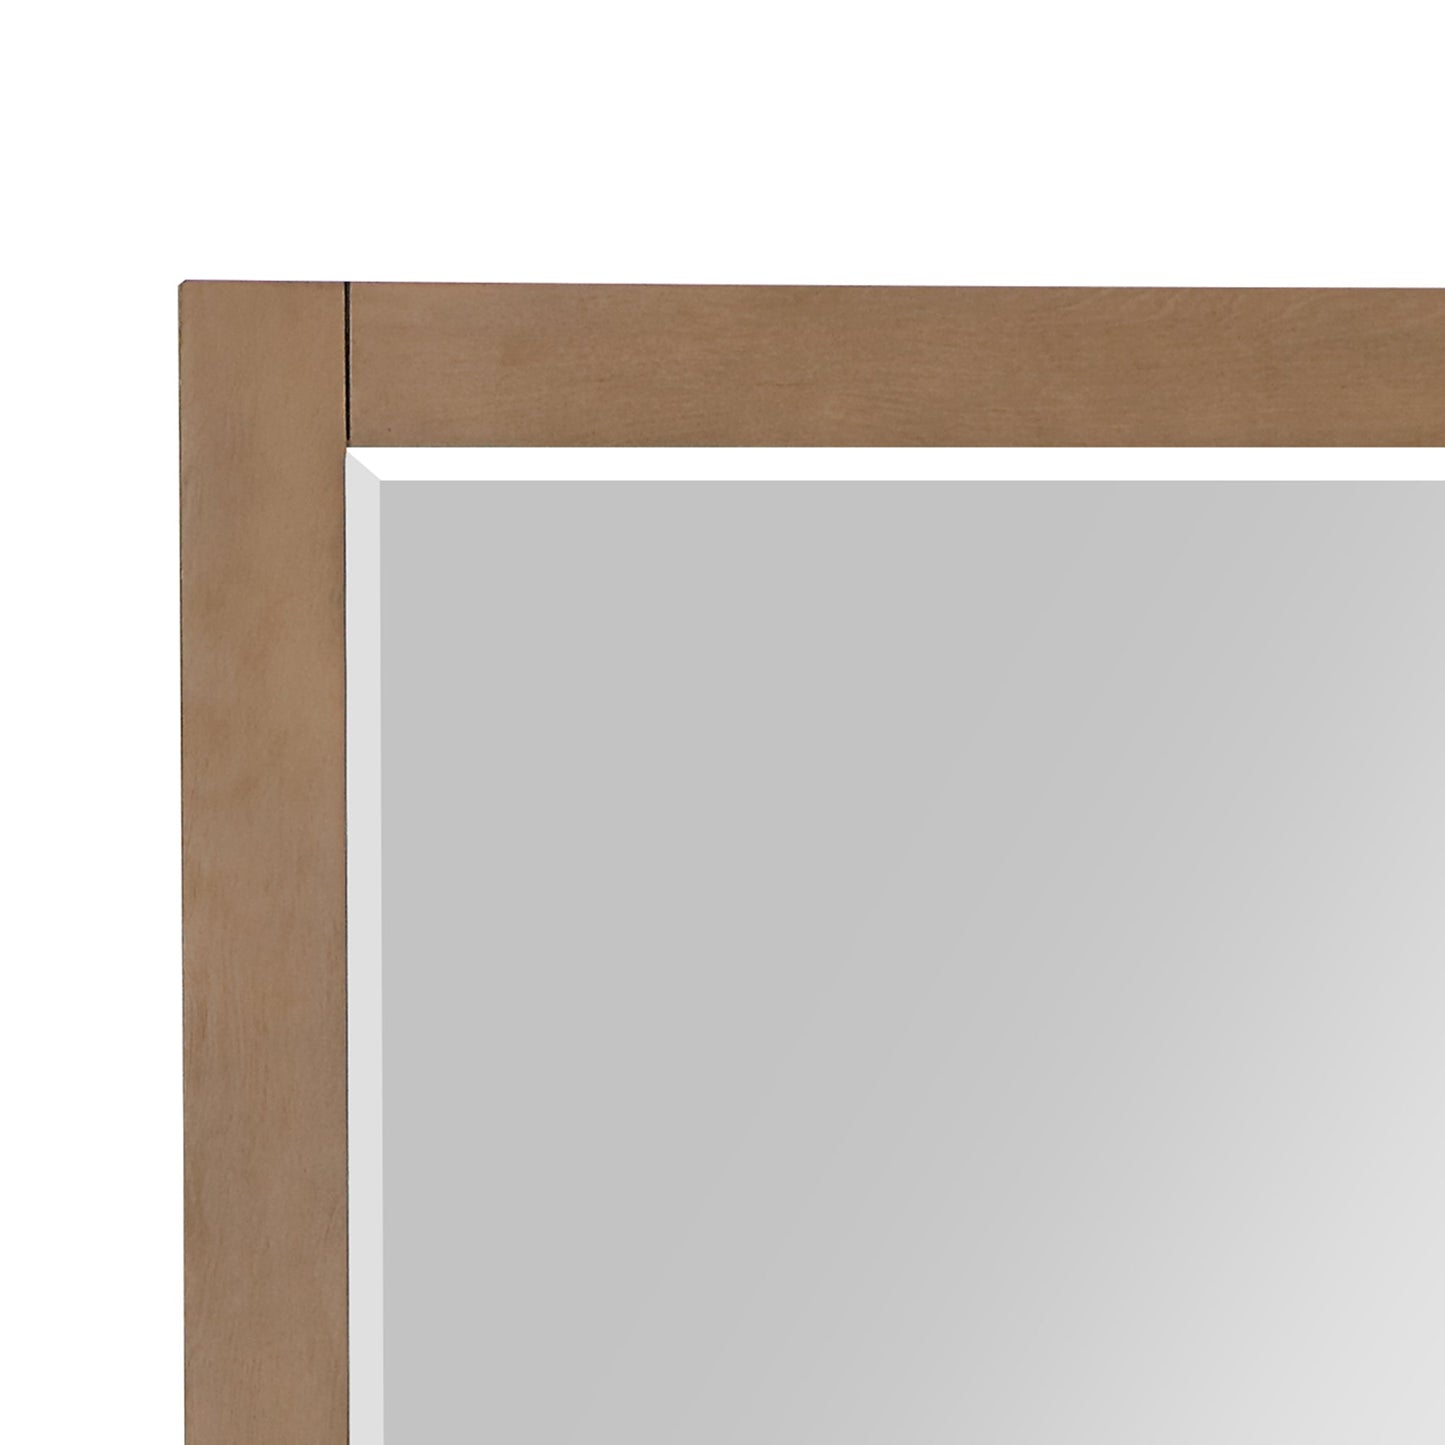 Ivy 48" Rectangular Bathroom Wood Framed Wall Mirror in Brown Pine